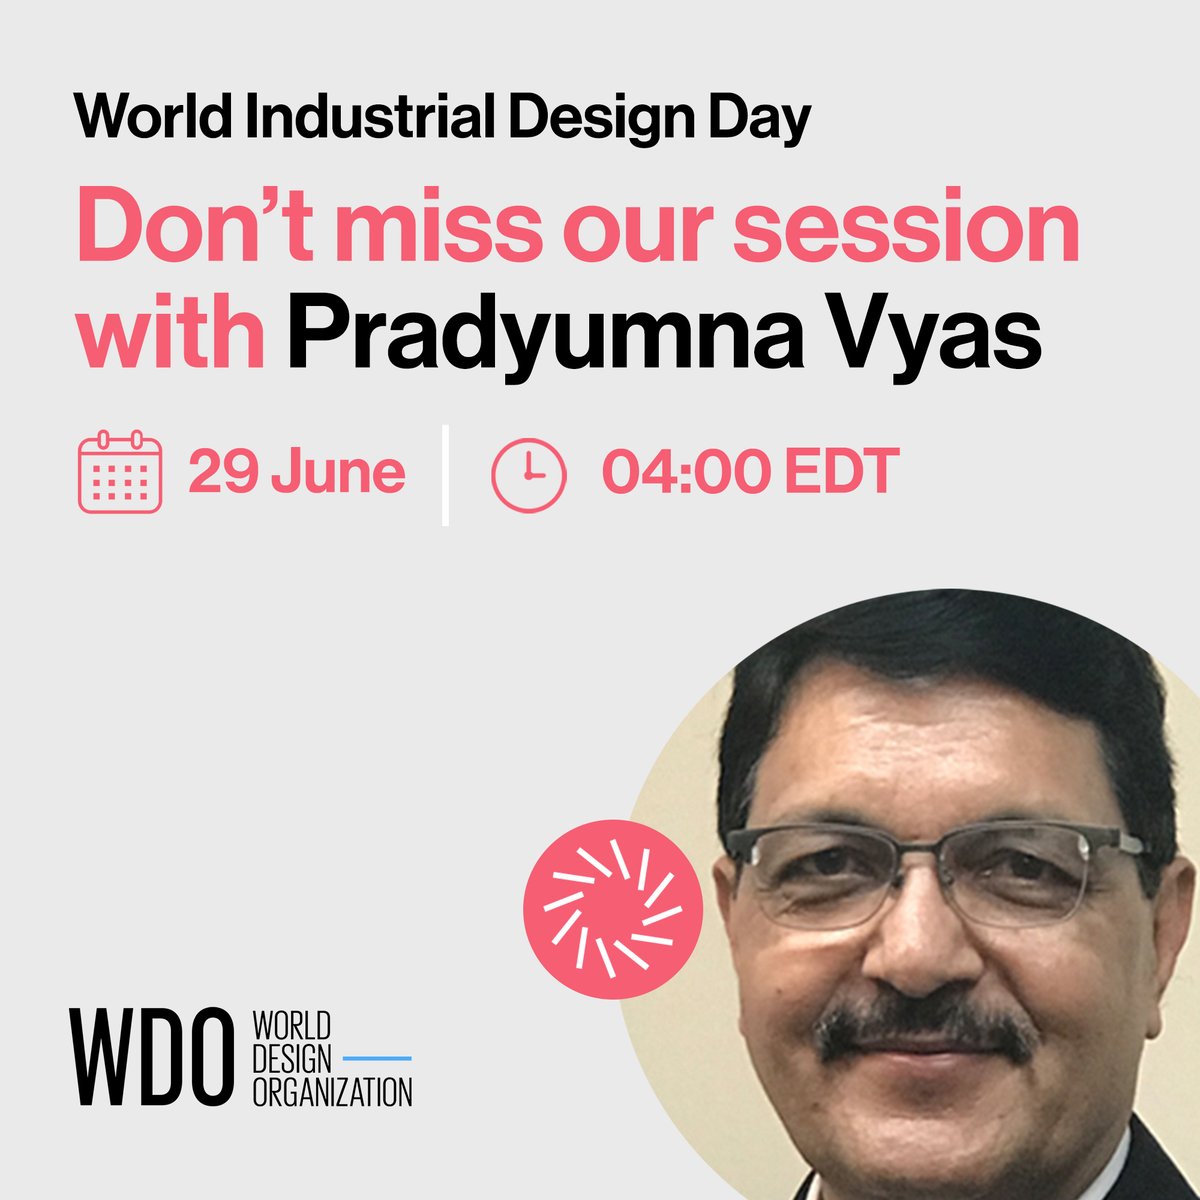 Meet speaker Mr. Pradyumna Vyas at World Industrial Design Day - India Dialogue from 1:30 - 4pm (IST)  
#widd2021 #widd2021indiadialogue #widd2021diversity #letstalkdiversity @worlddesignorg @vyas_pradyumna 
Register here: us02web.zoom.us/webinar/regist…